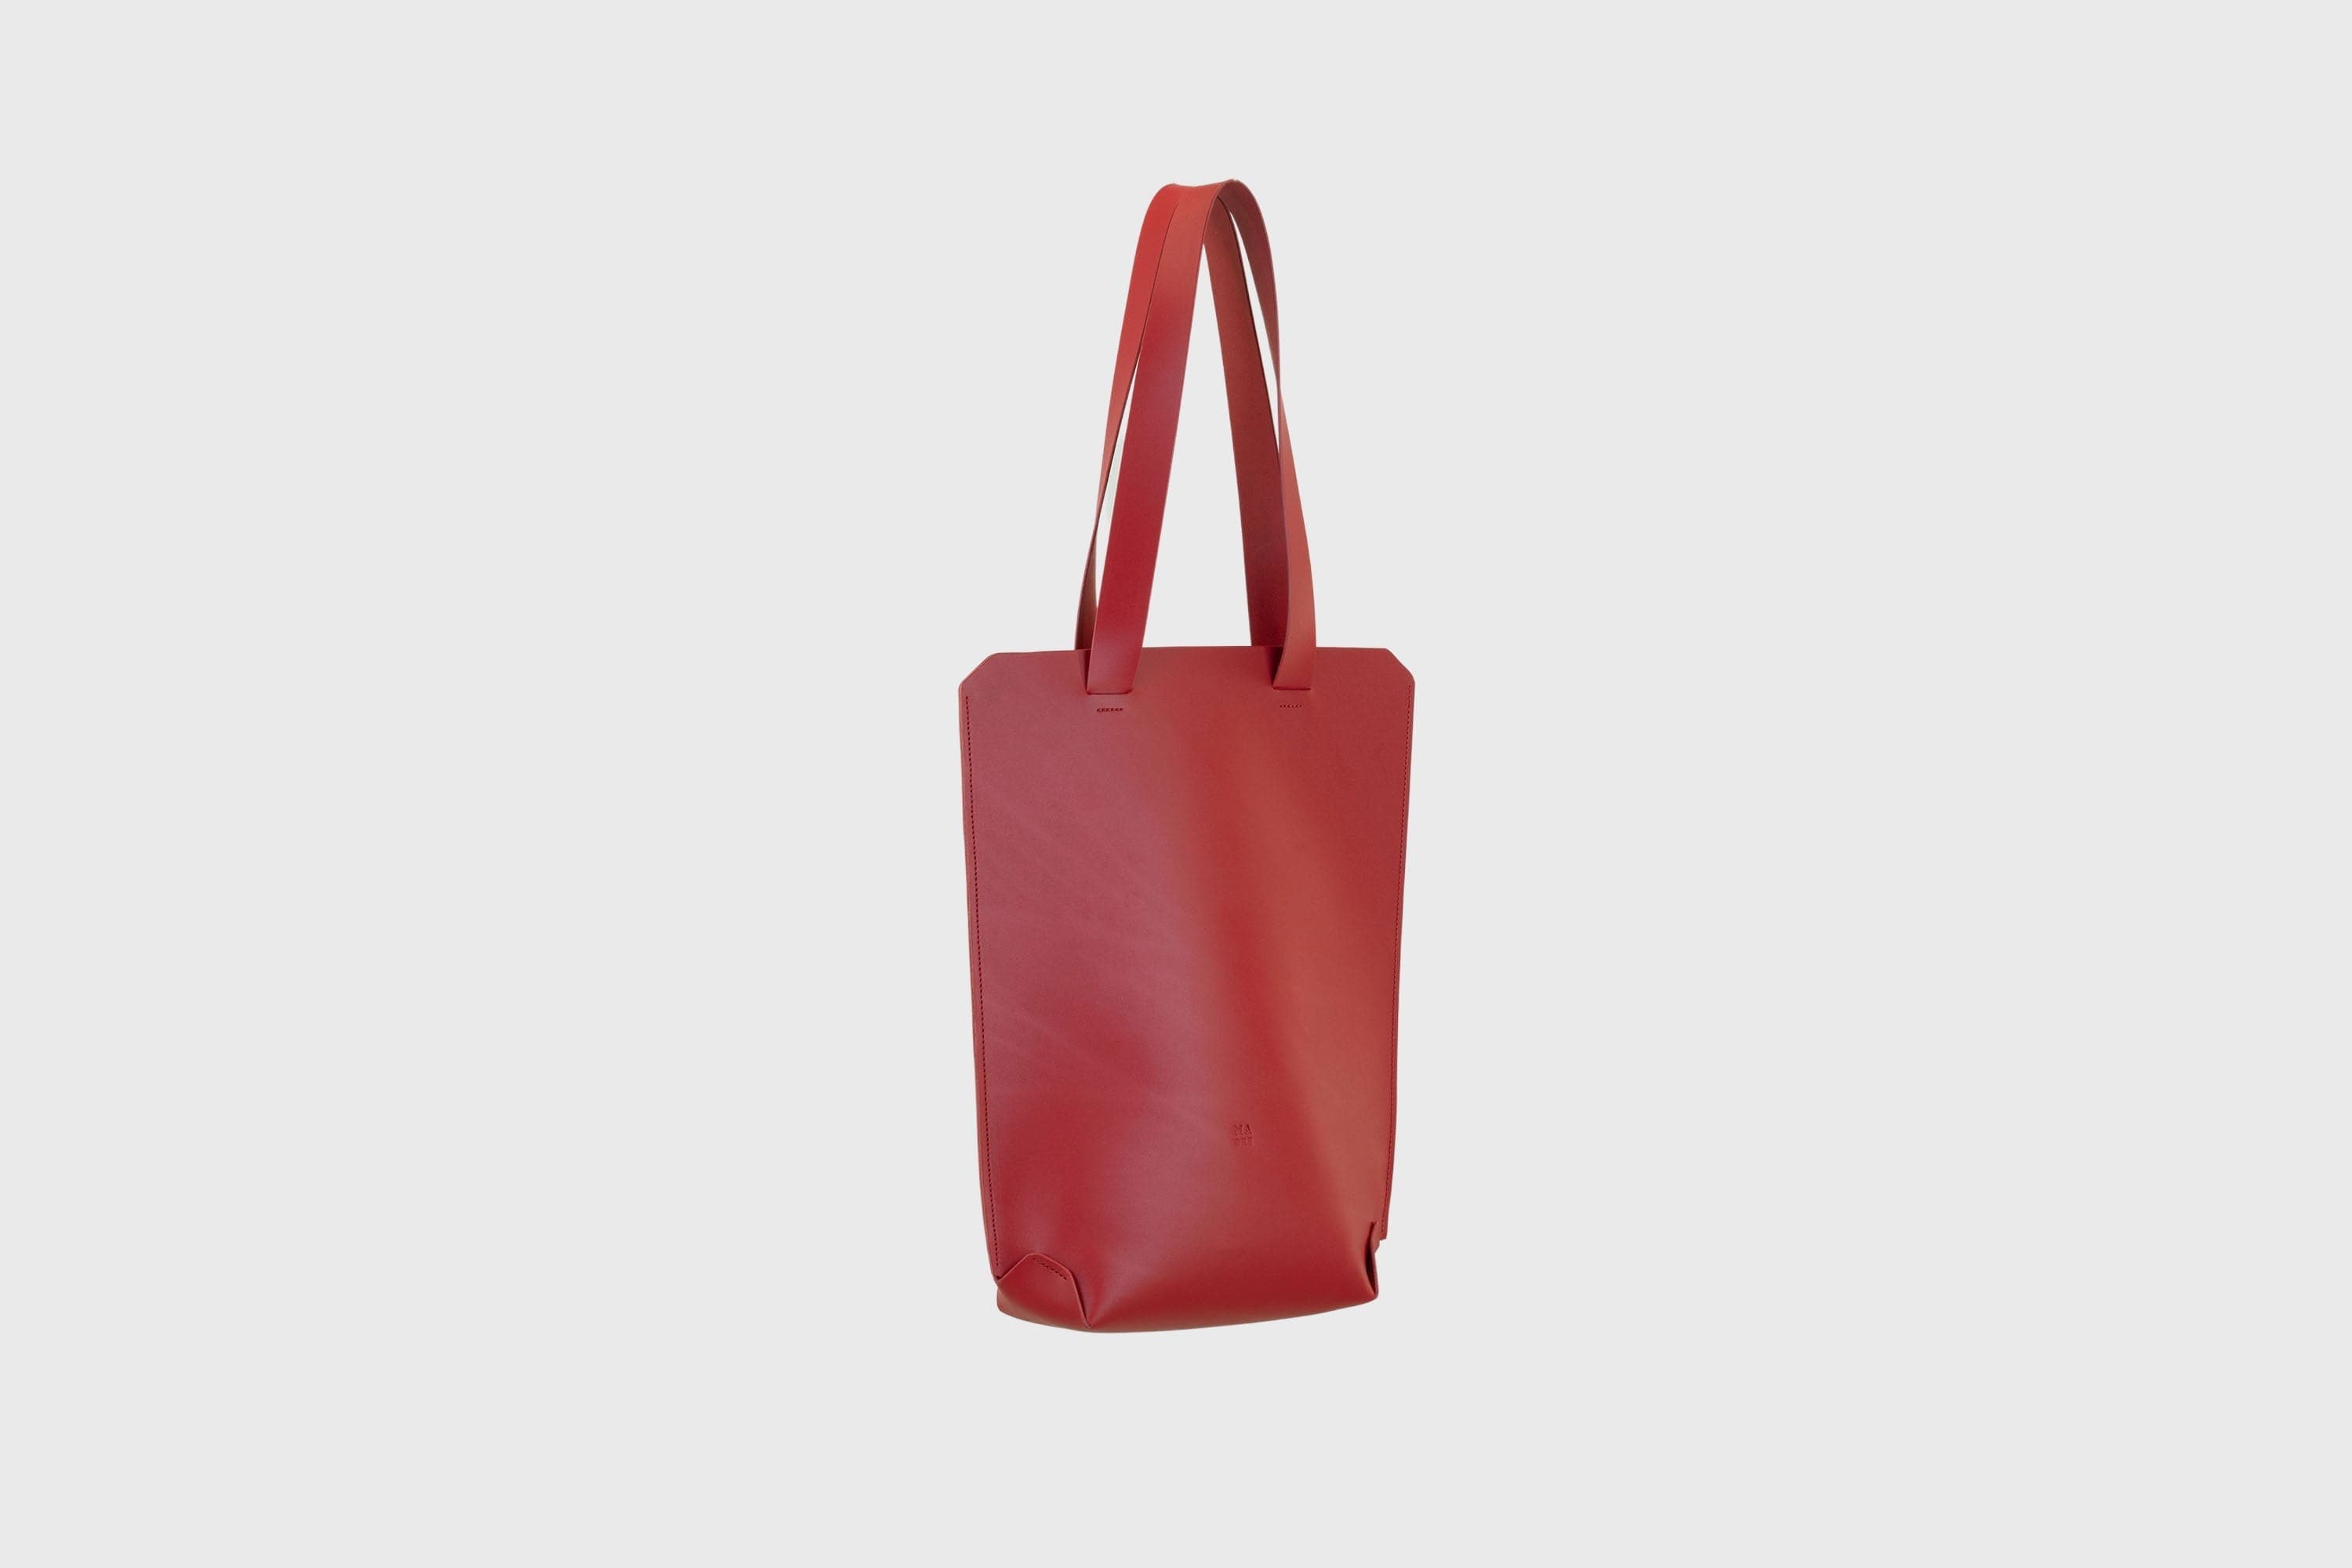 Red Long Tote Bag Leather Vachetta Minimalistic Design By Manuel Dreesmann Atelier Madre Barcelona Spain